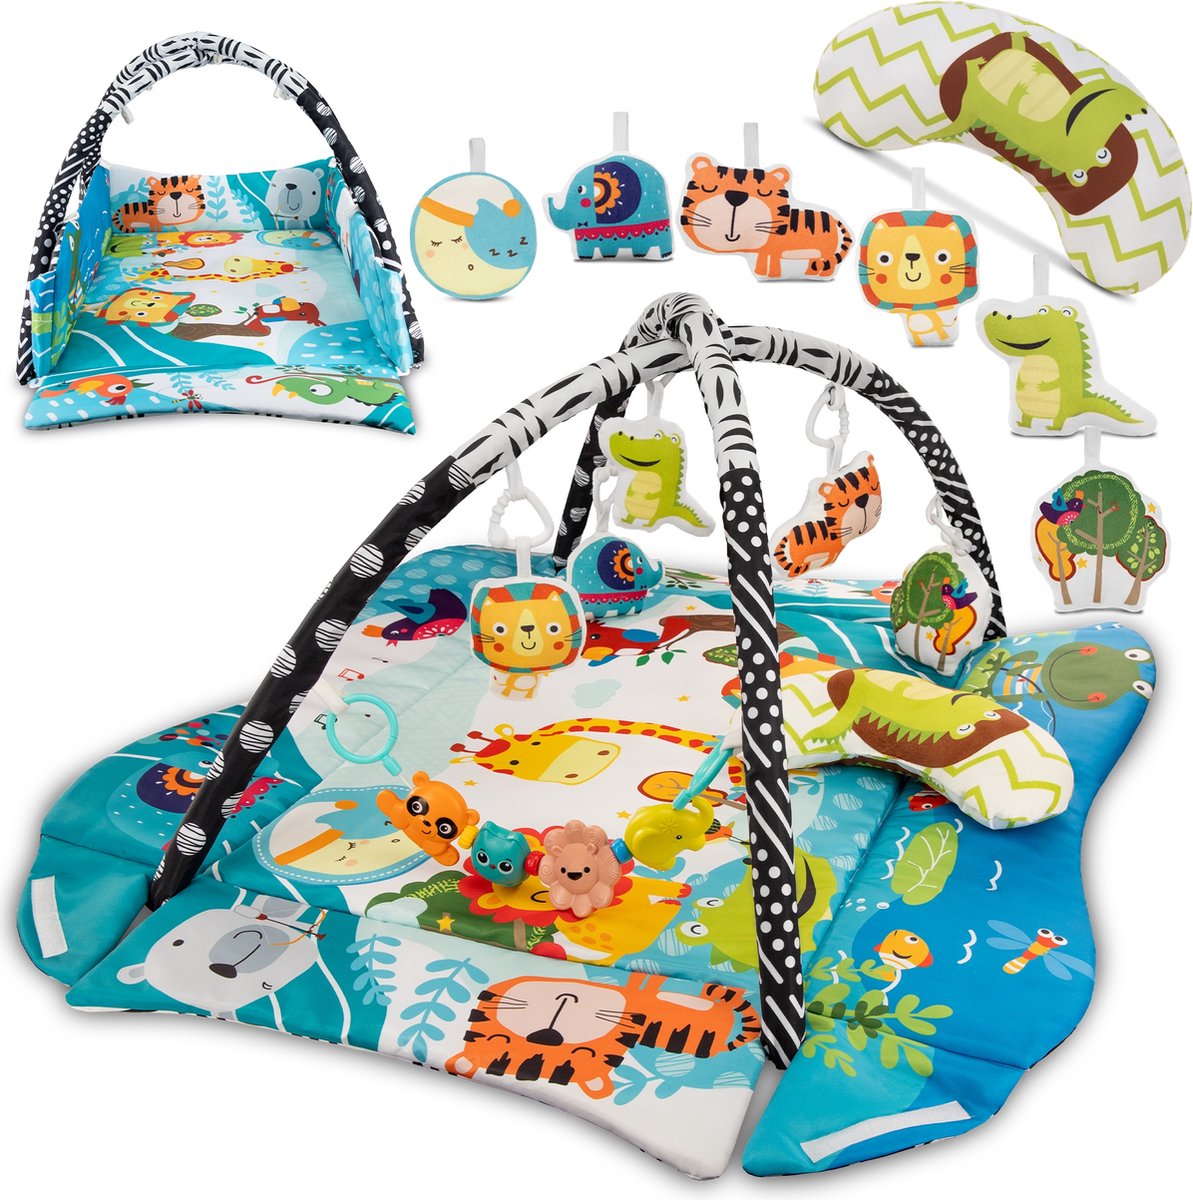 Lionelo Anika Plus Multicolor – Babygym – 2 in 1 Speelkleed – 5 speelgoed